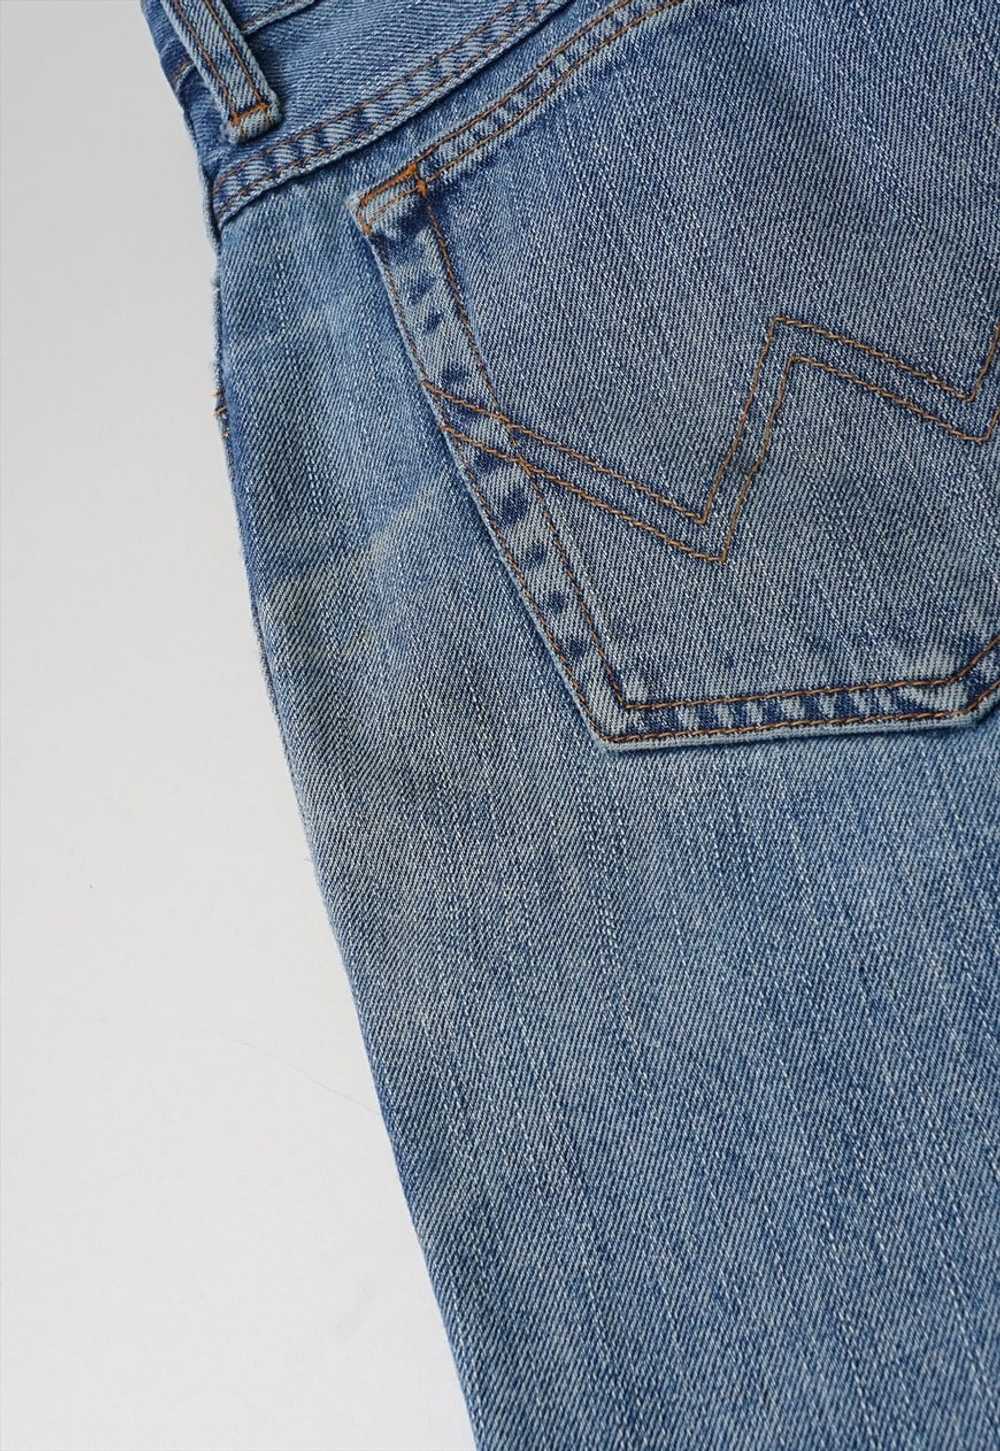 Vintage Wrangler Texas Blue Jeans Womens - image 5